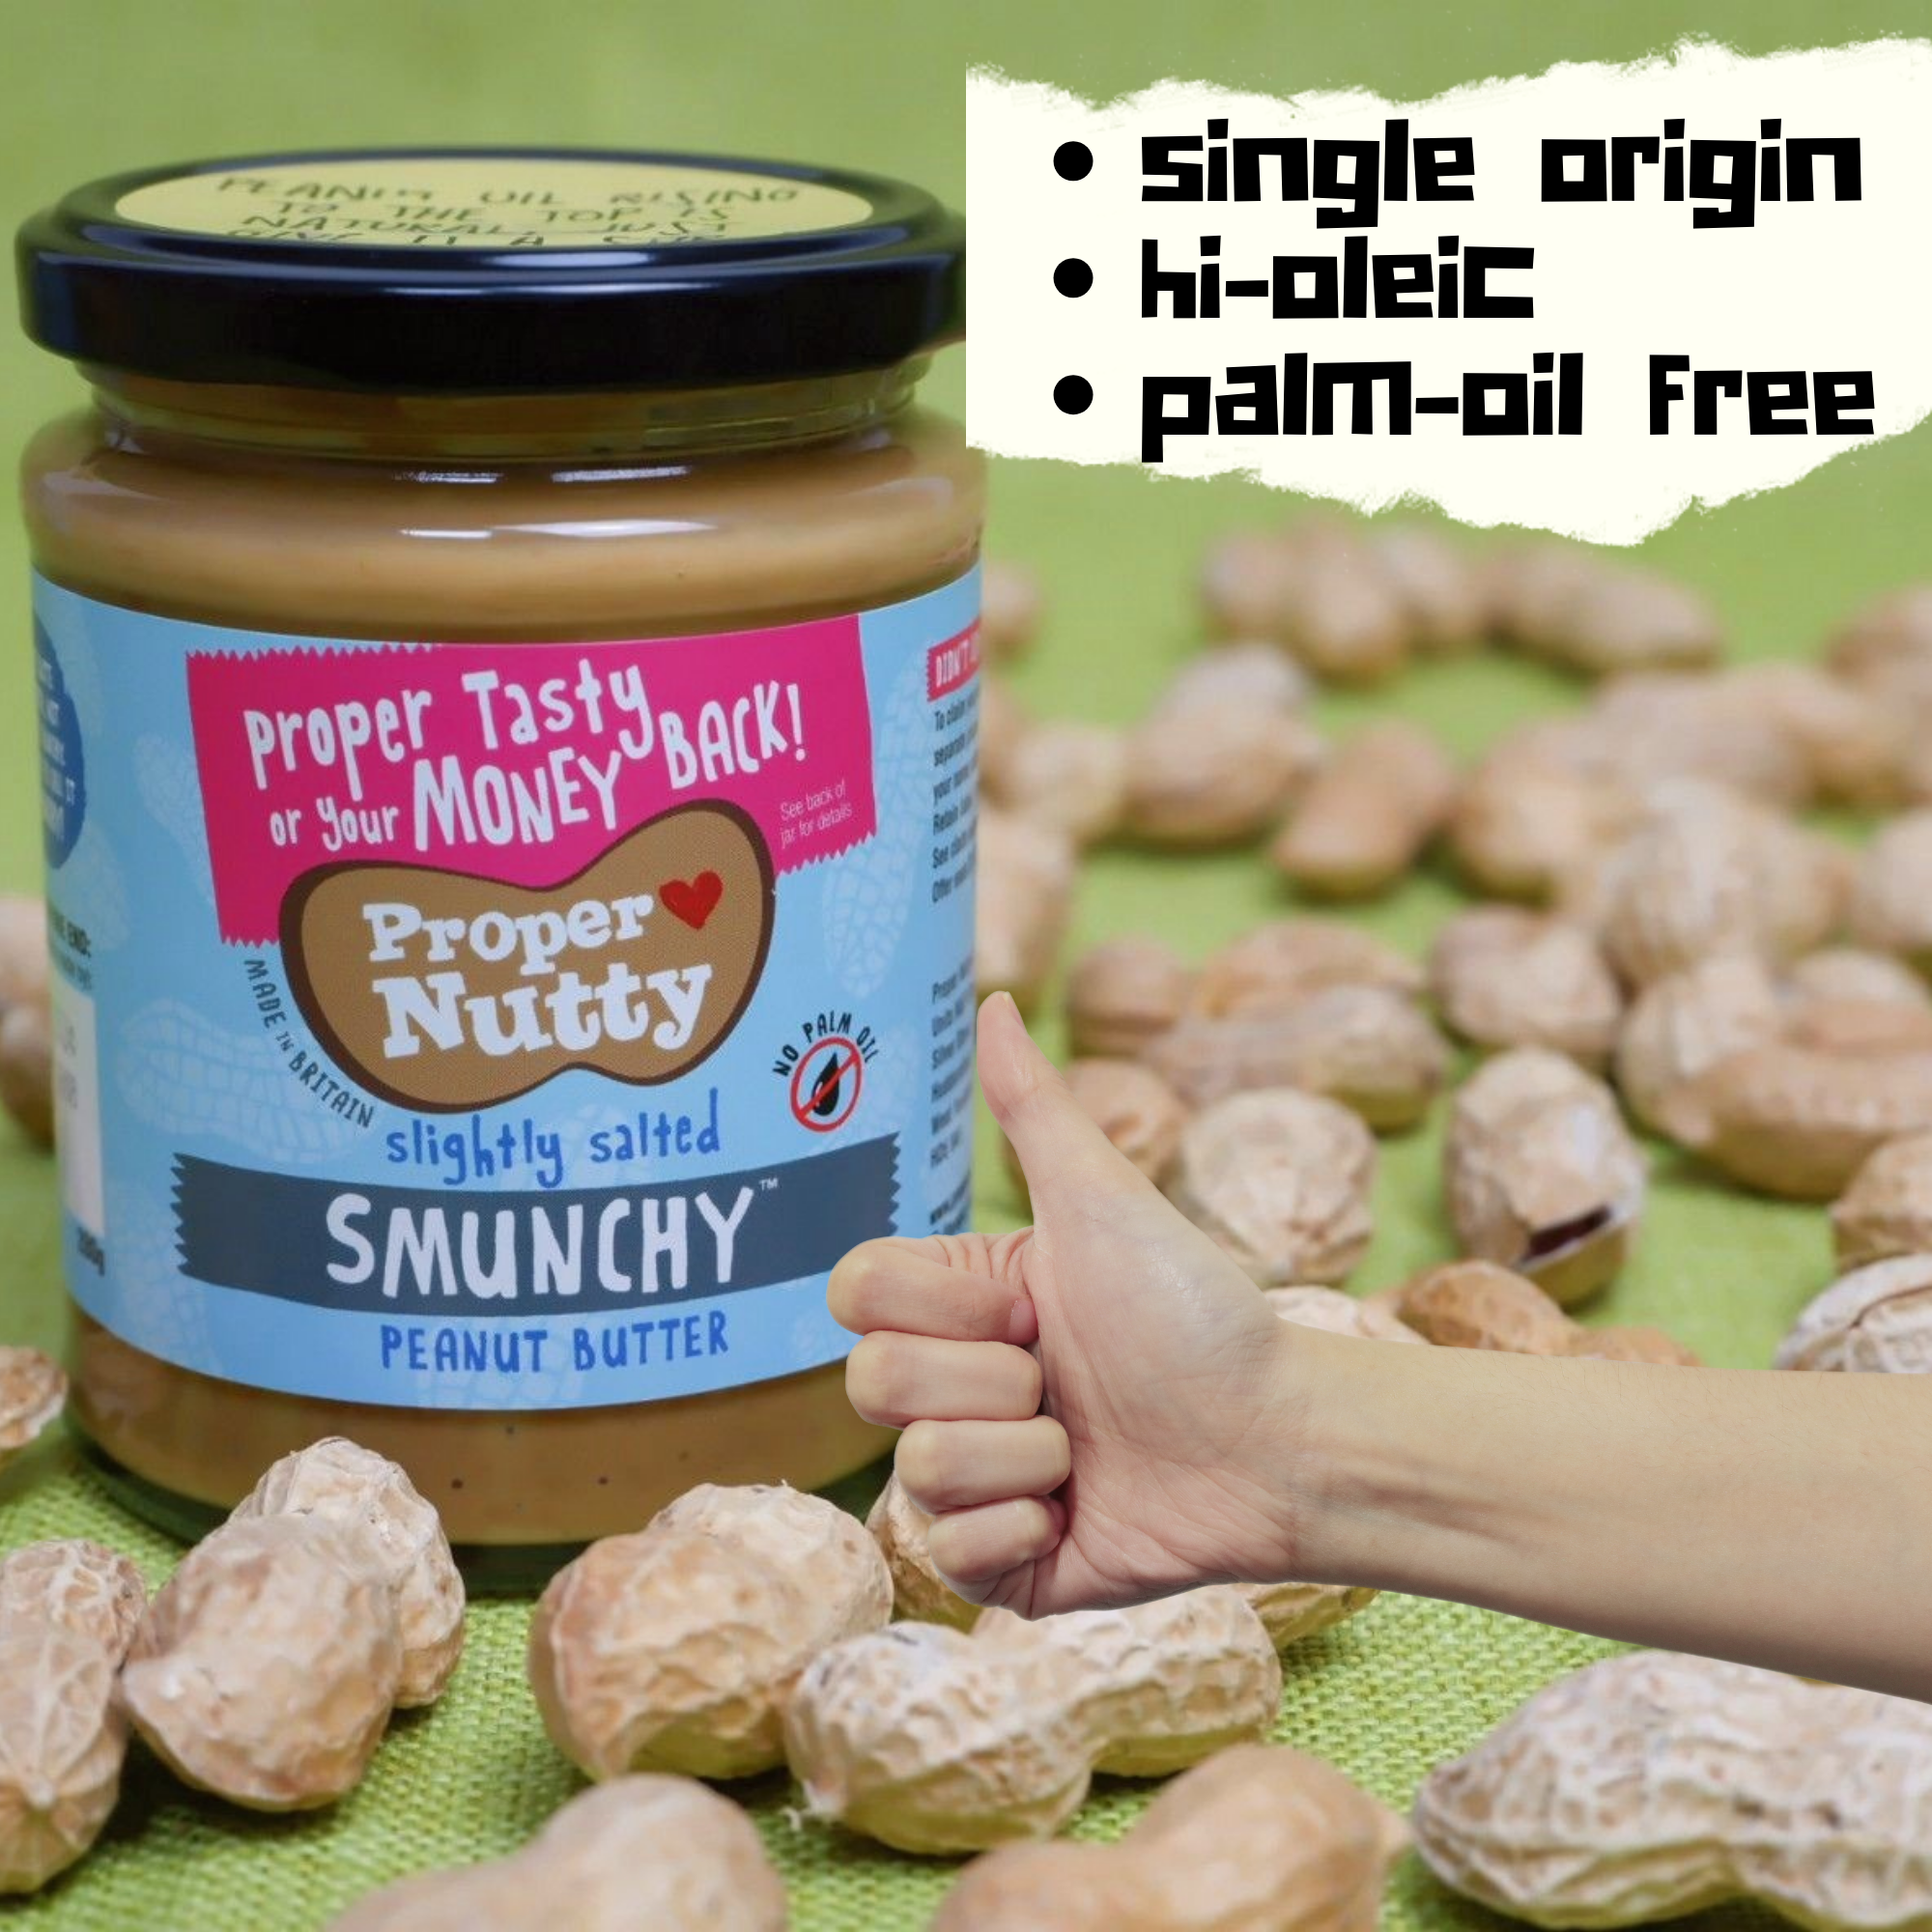 Proper Nutty| Artisan Smooth & Crunchy [Smunchy]| Peanut Butter| 99.5% Peanuts 0.5% Sea Salt |280g glass jar